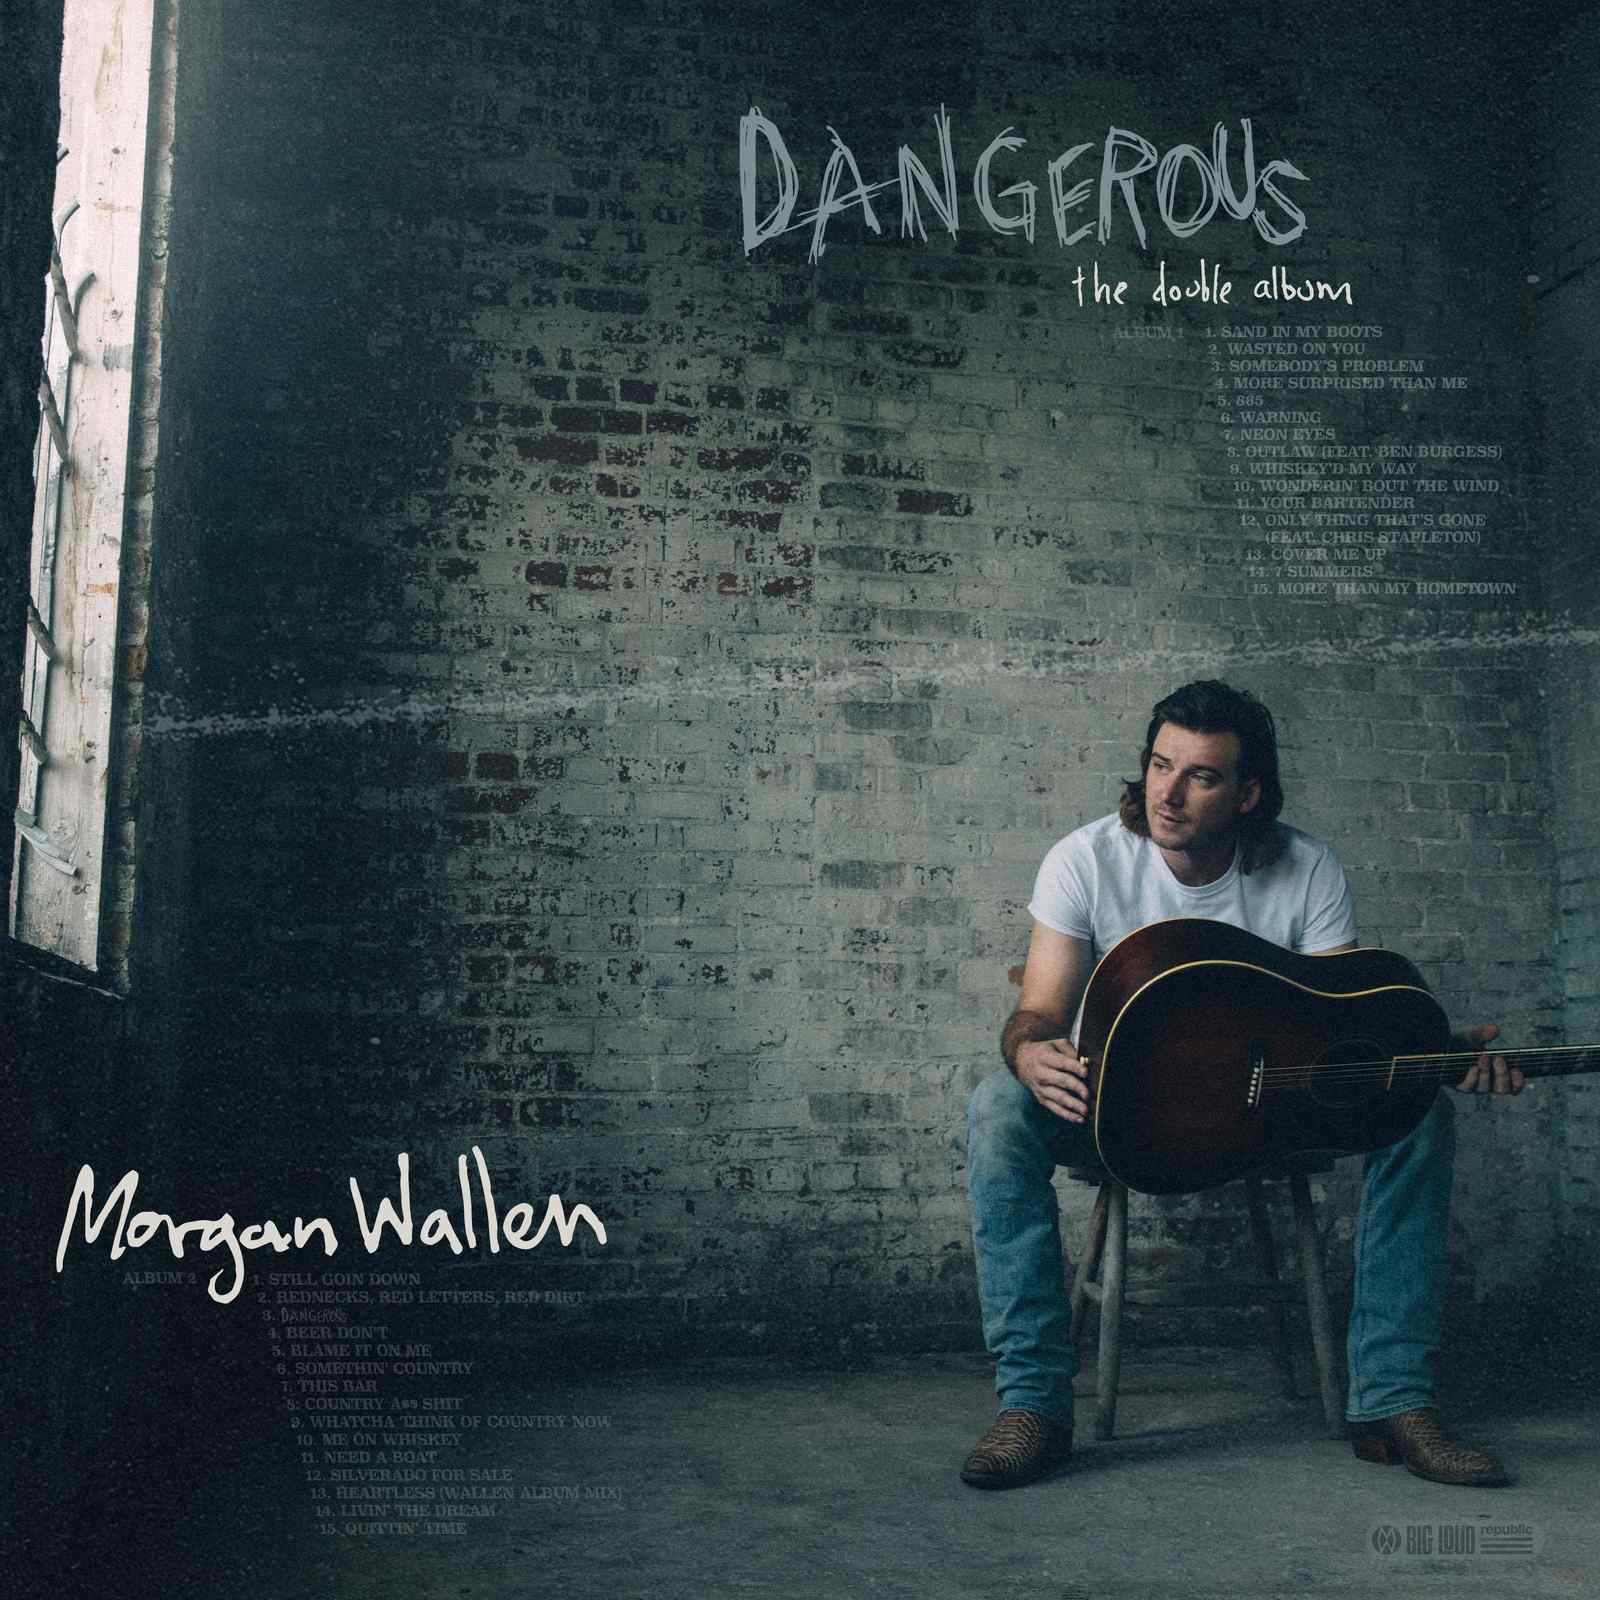 Dangerous The Double Album by Morgan Wallen